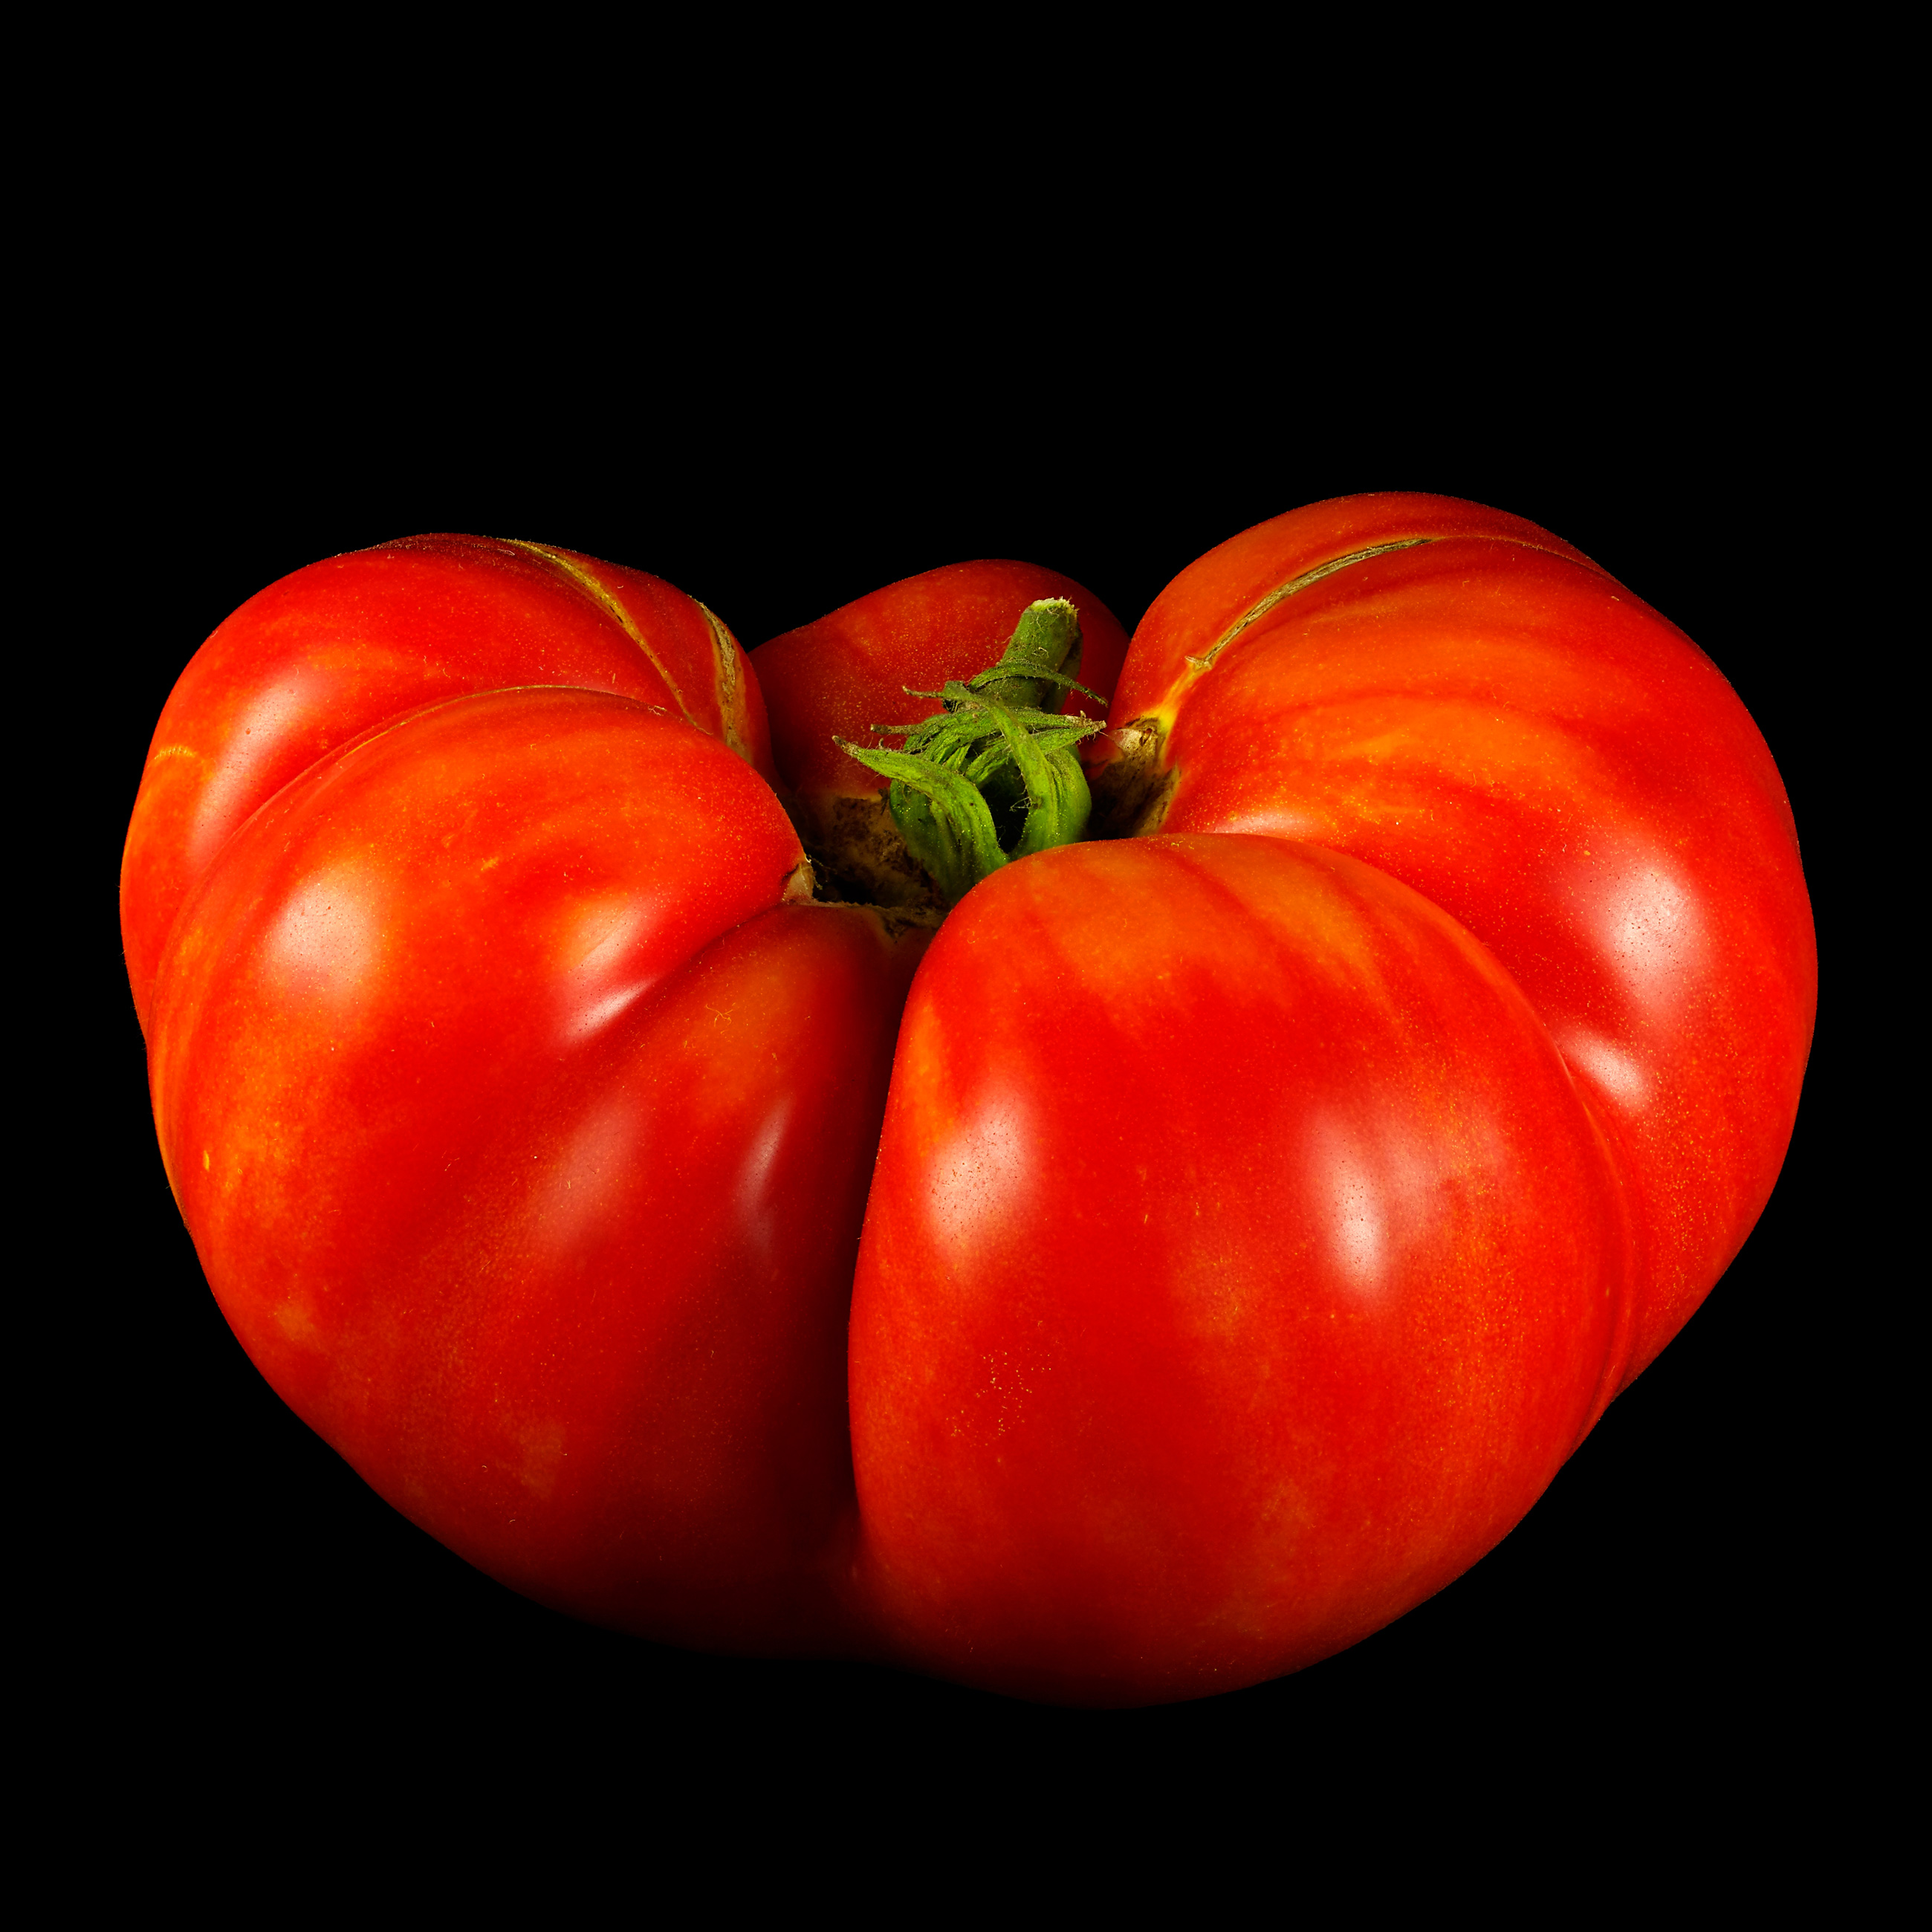 Pinapple-Tomato: Solanum lycopersicum ‚Pinapple‘